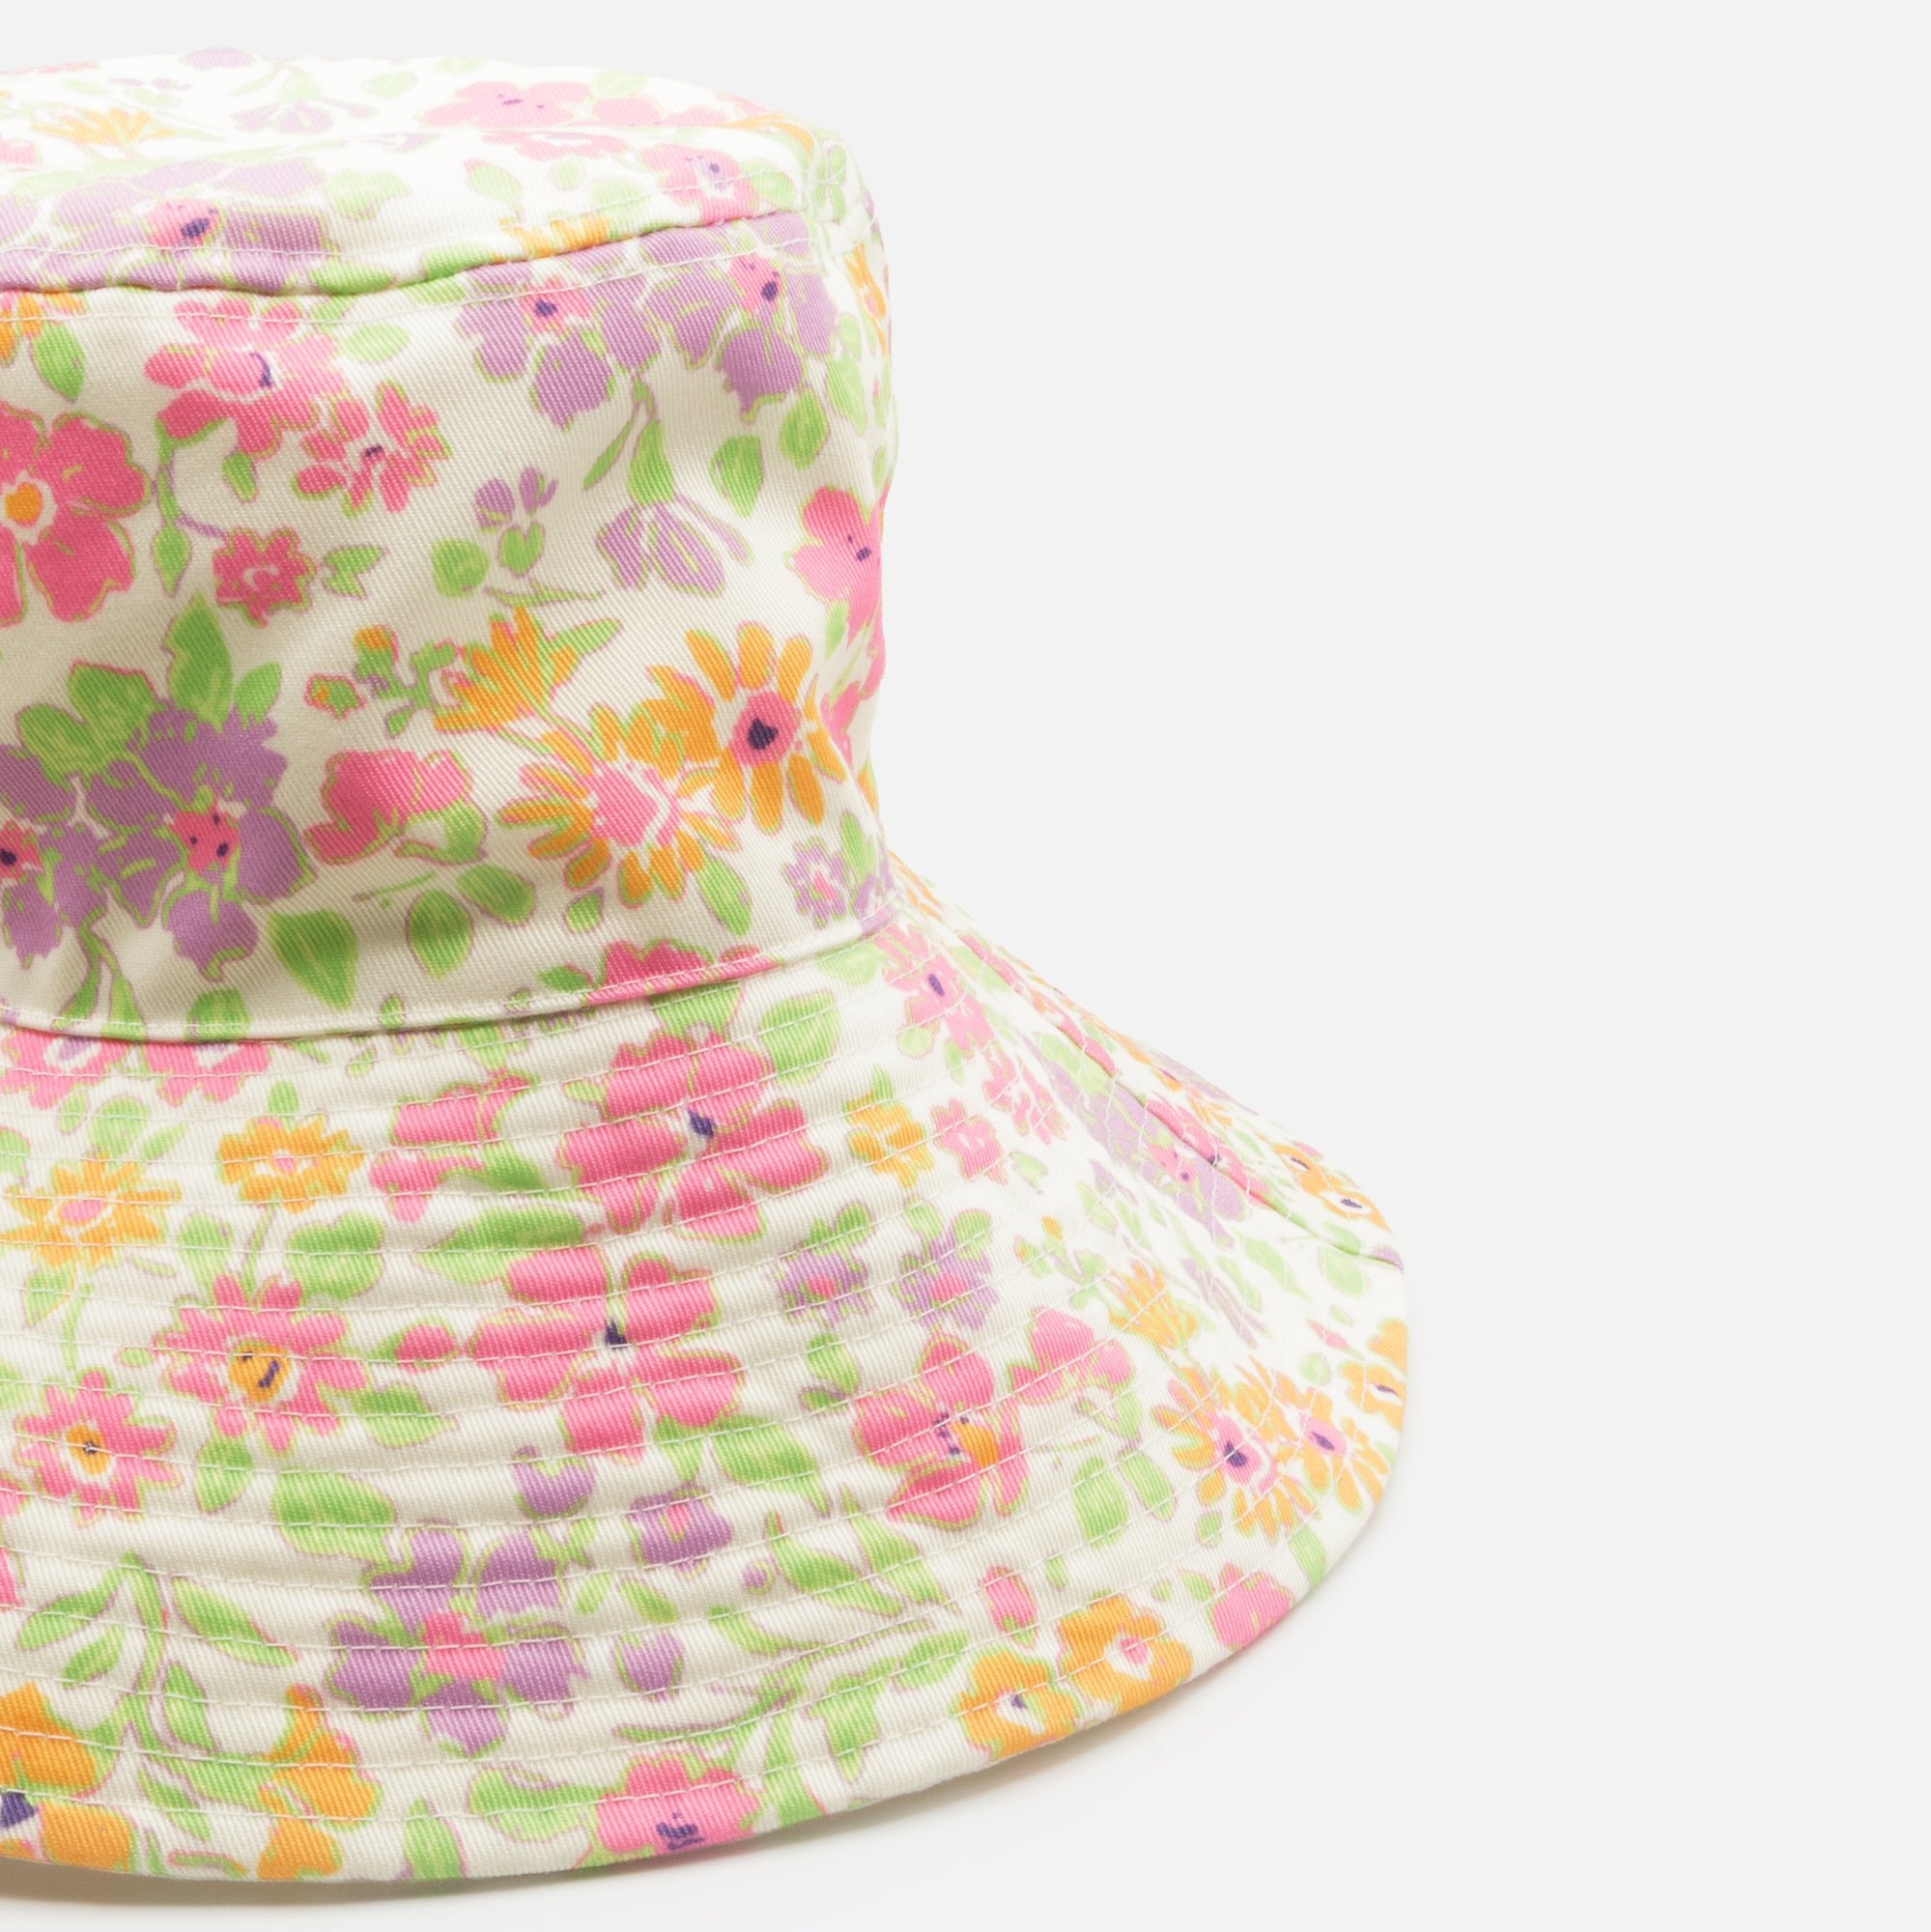 Reversible floral print floppy hat